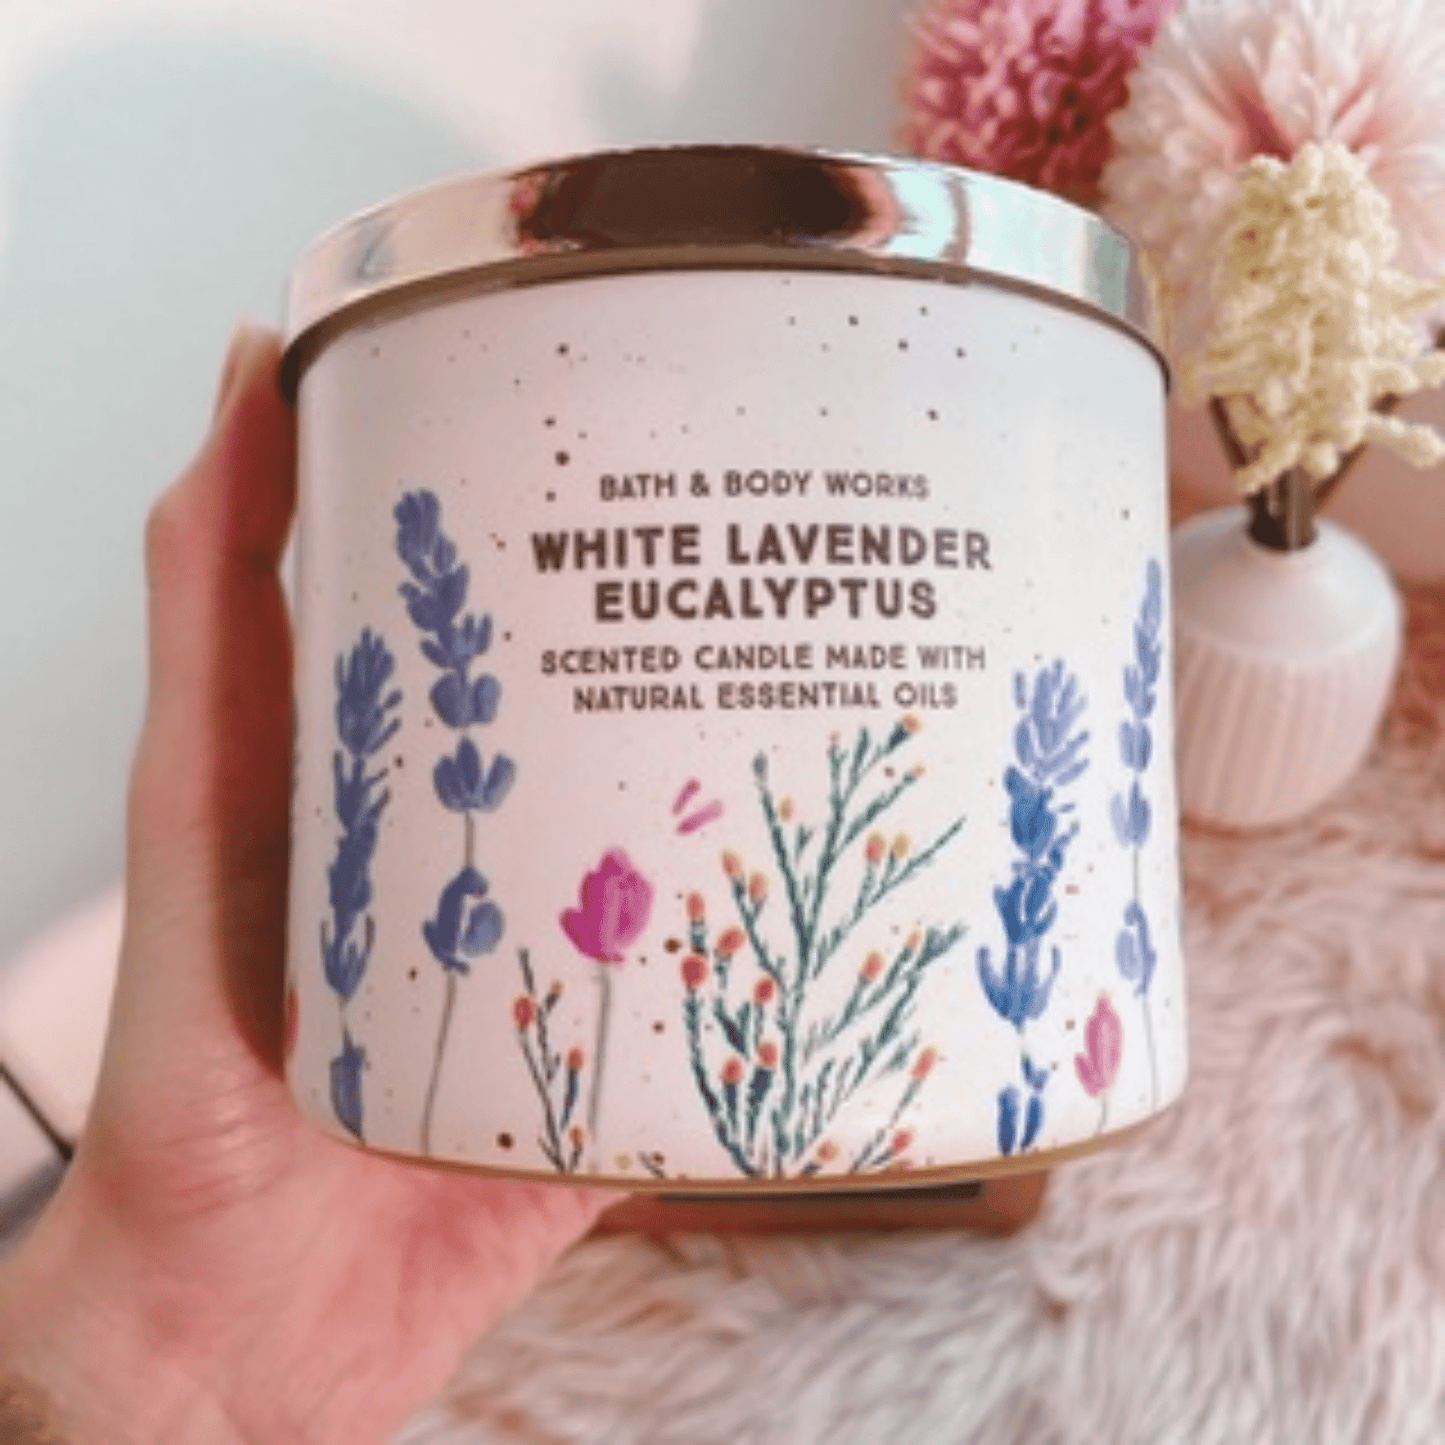 Bath & Body Works White Lavender Eucalyptus 3 wick candle (411g)